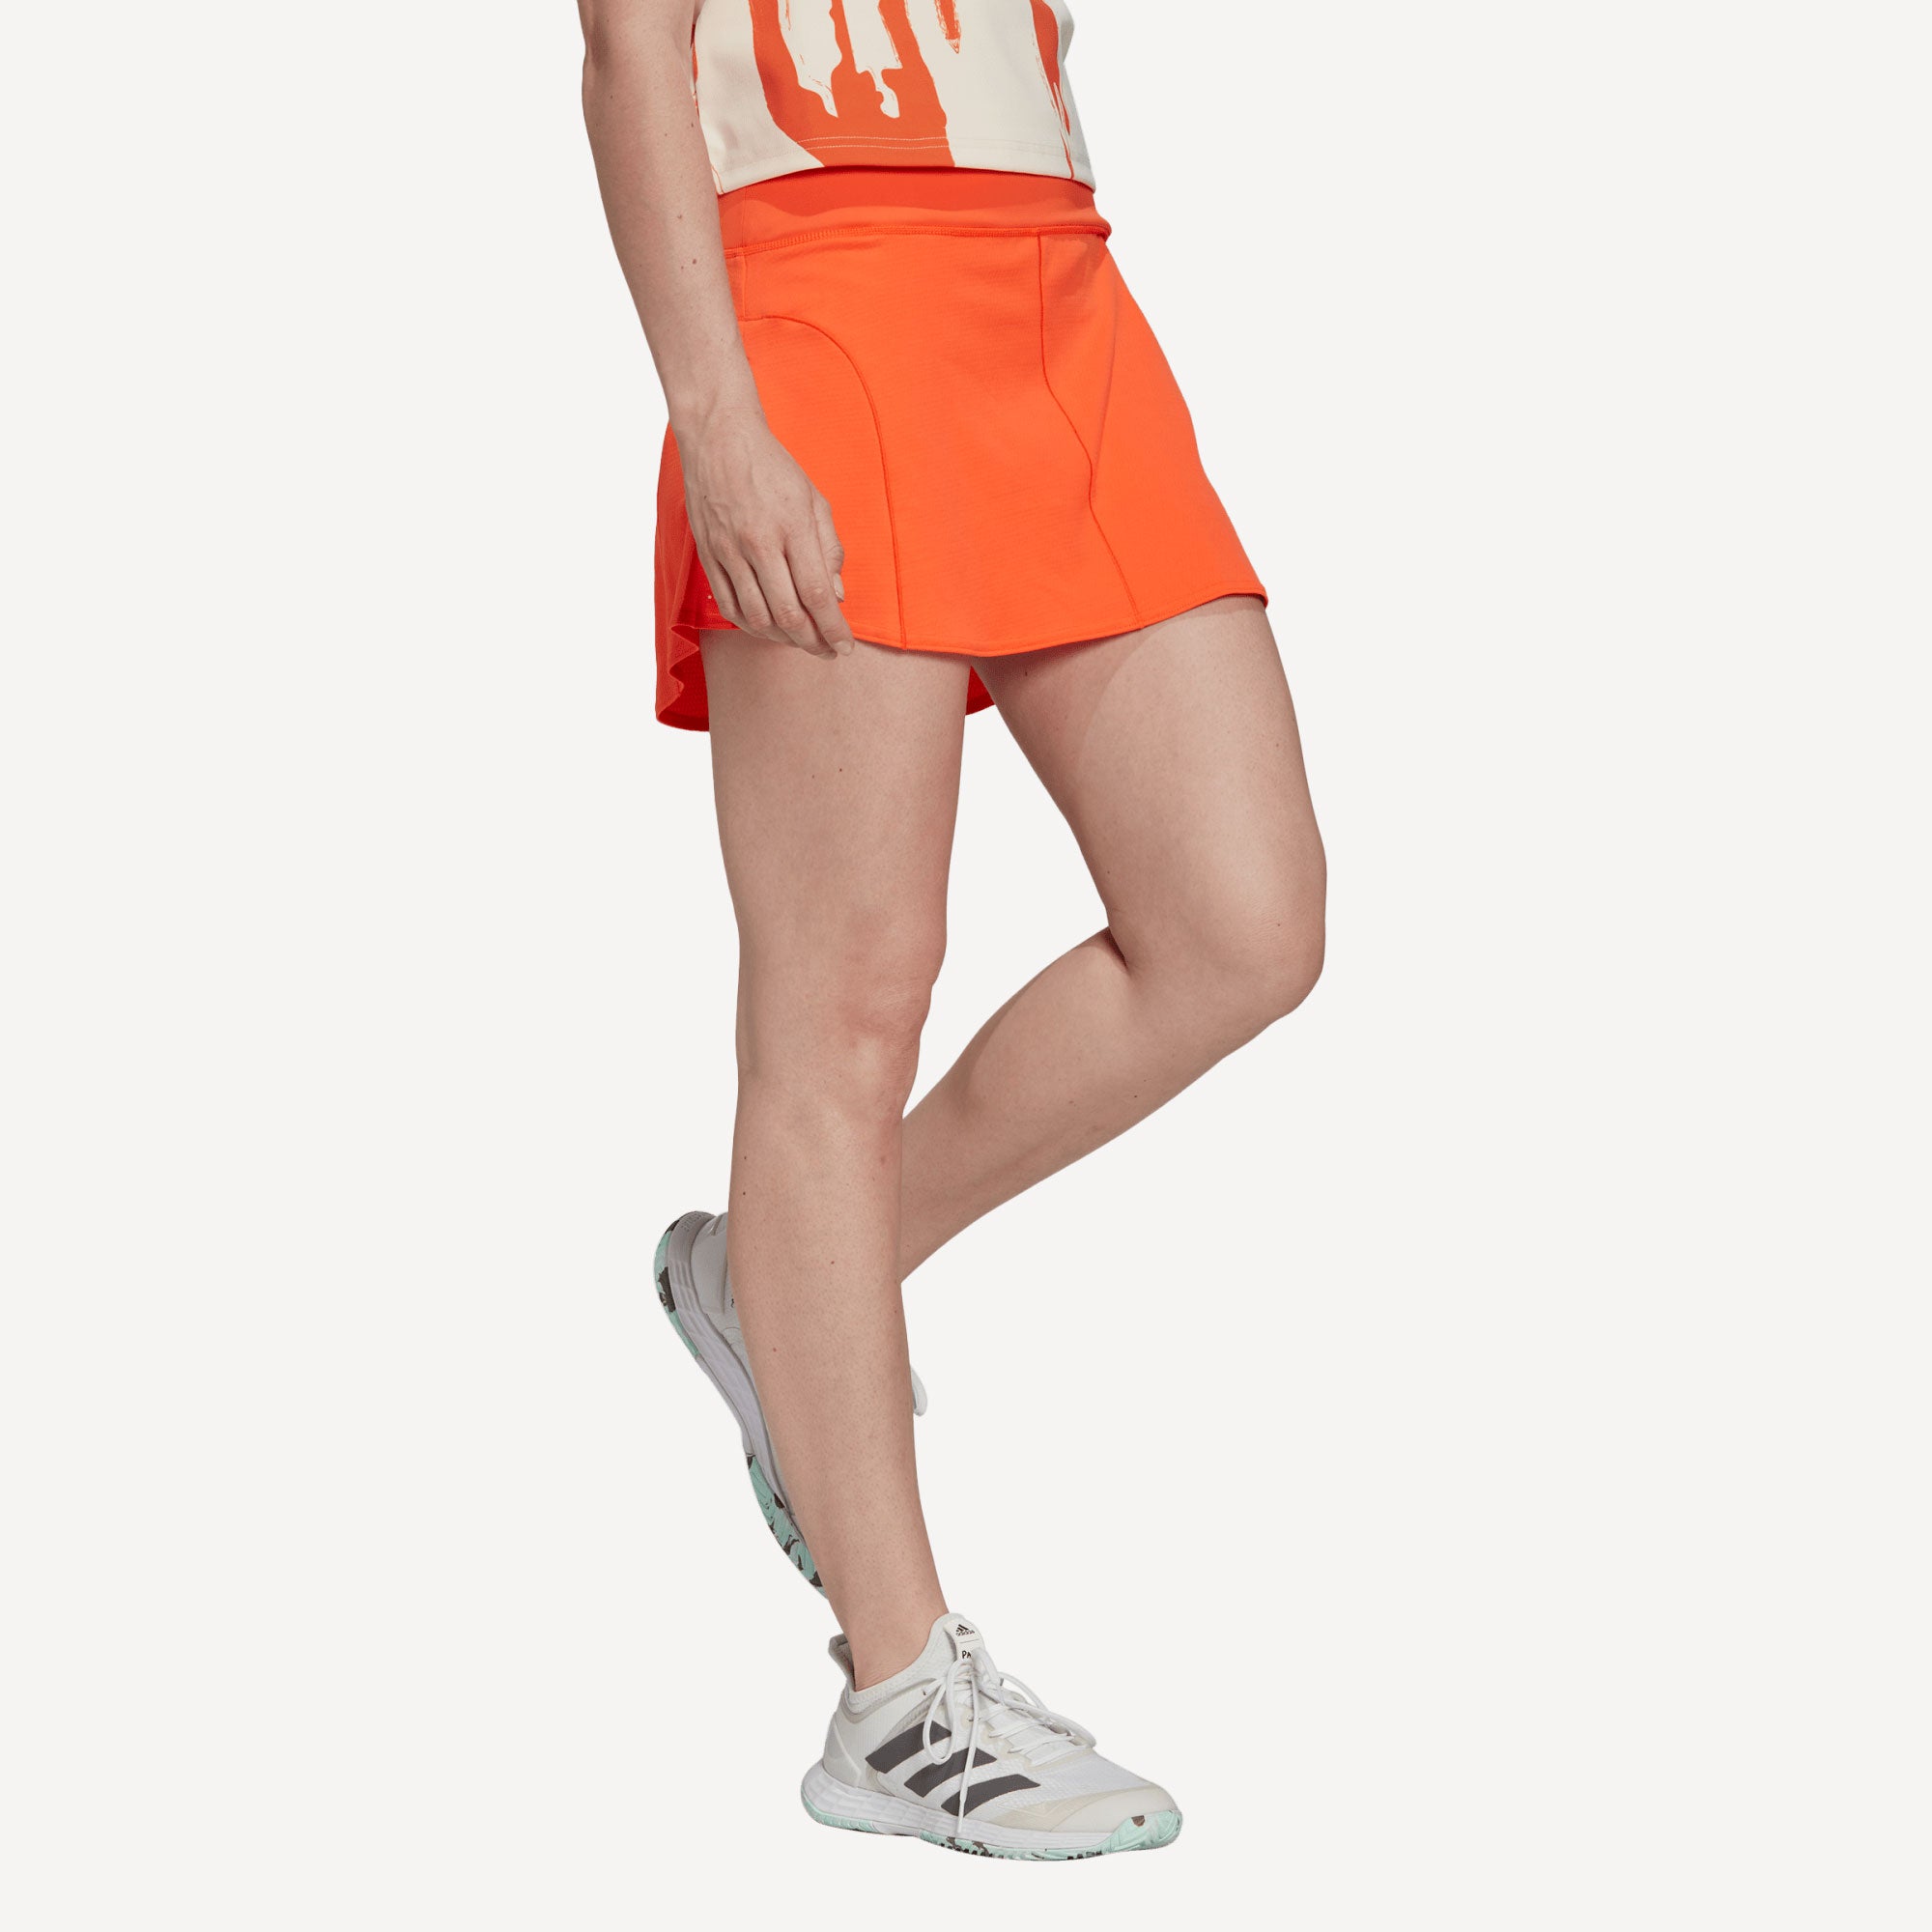 adidas Match Women's Tennis Skirt Orange (3)